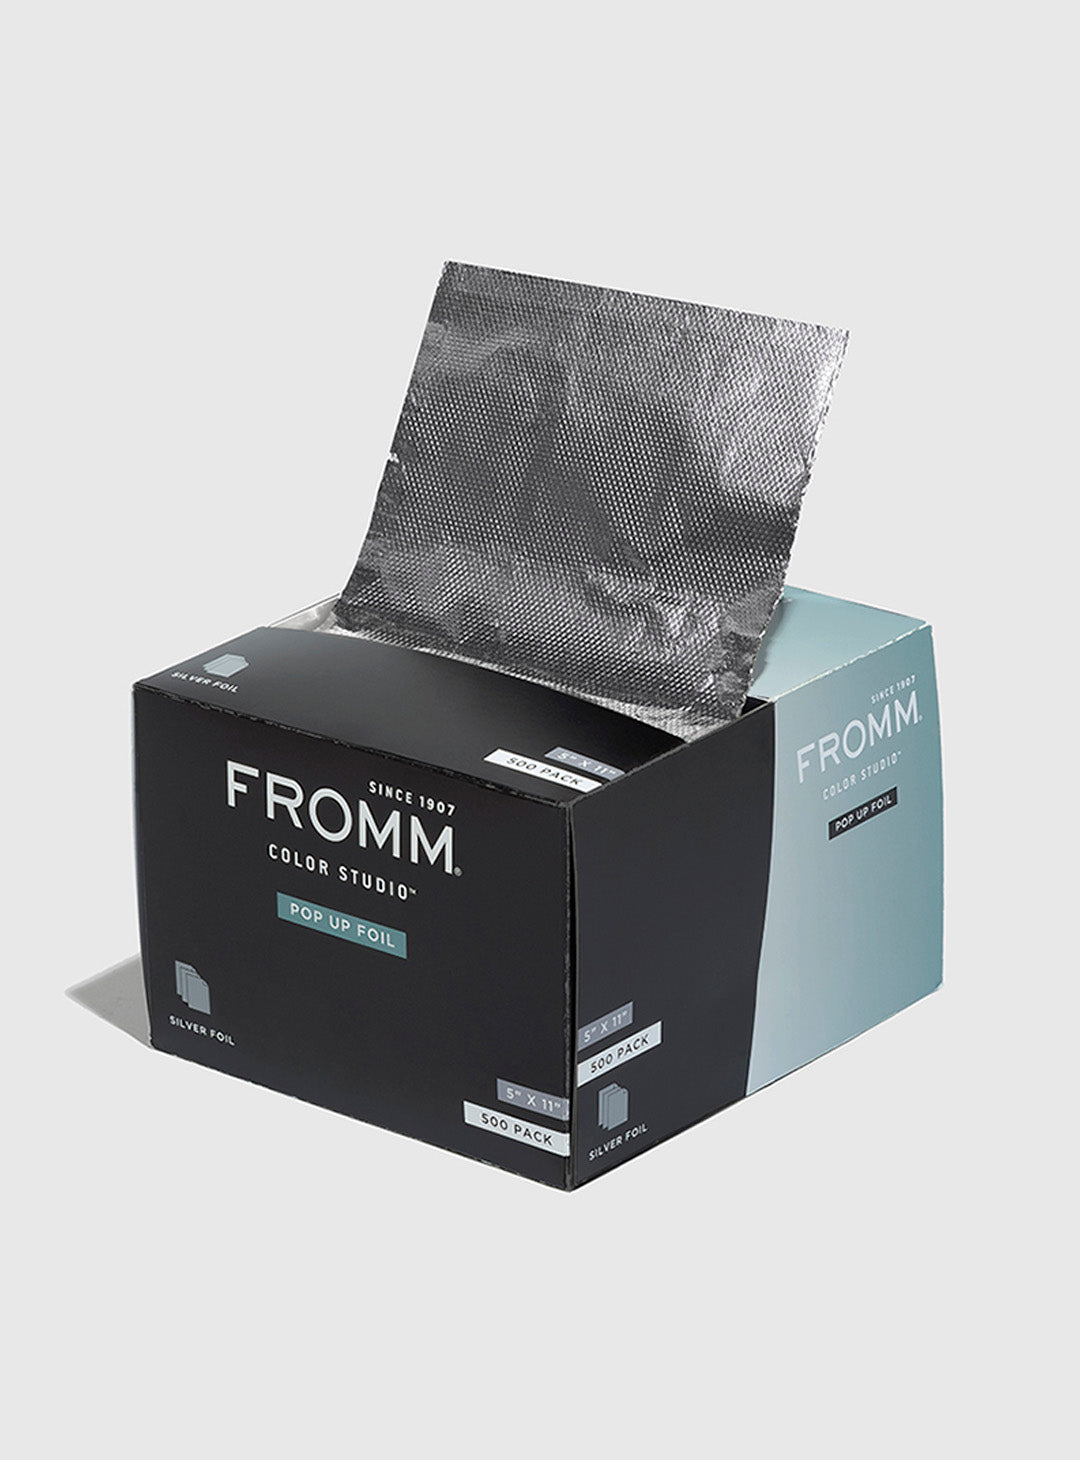 Fromm 5x11 Lightweight Pop-Up Foil Silver - 500 Count